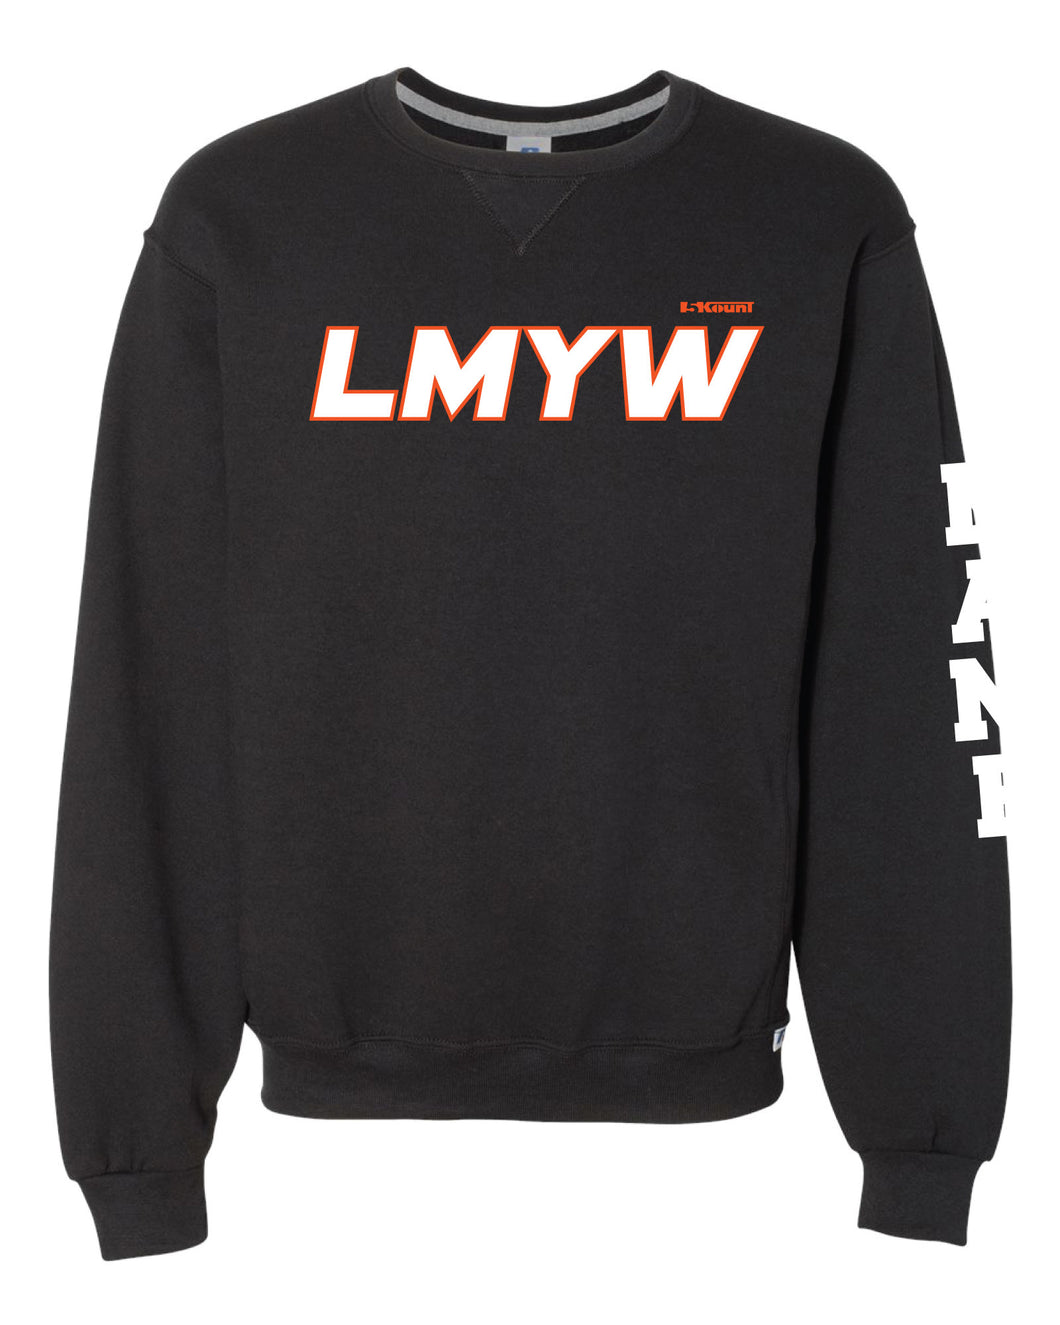 LMYW Russell Athletic Cotton Crewneck Sweatshirt - Black - 5KounT2018